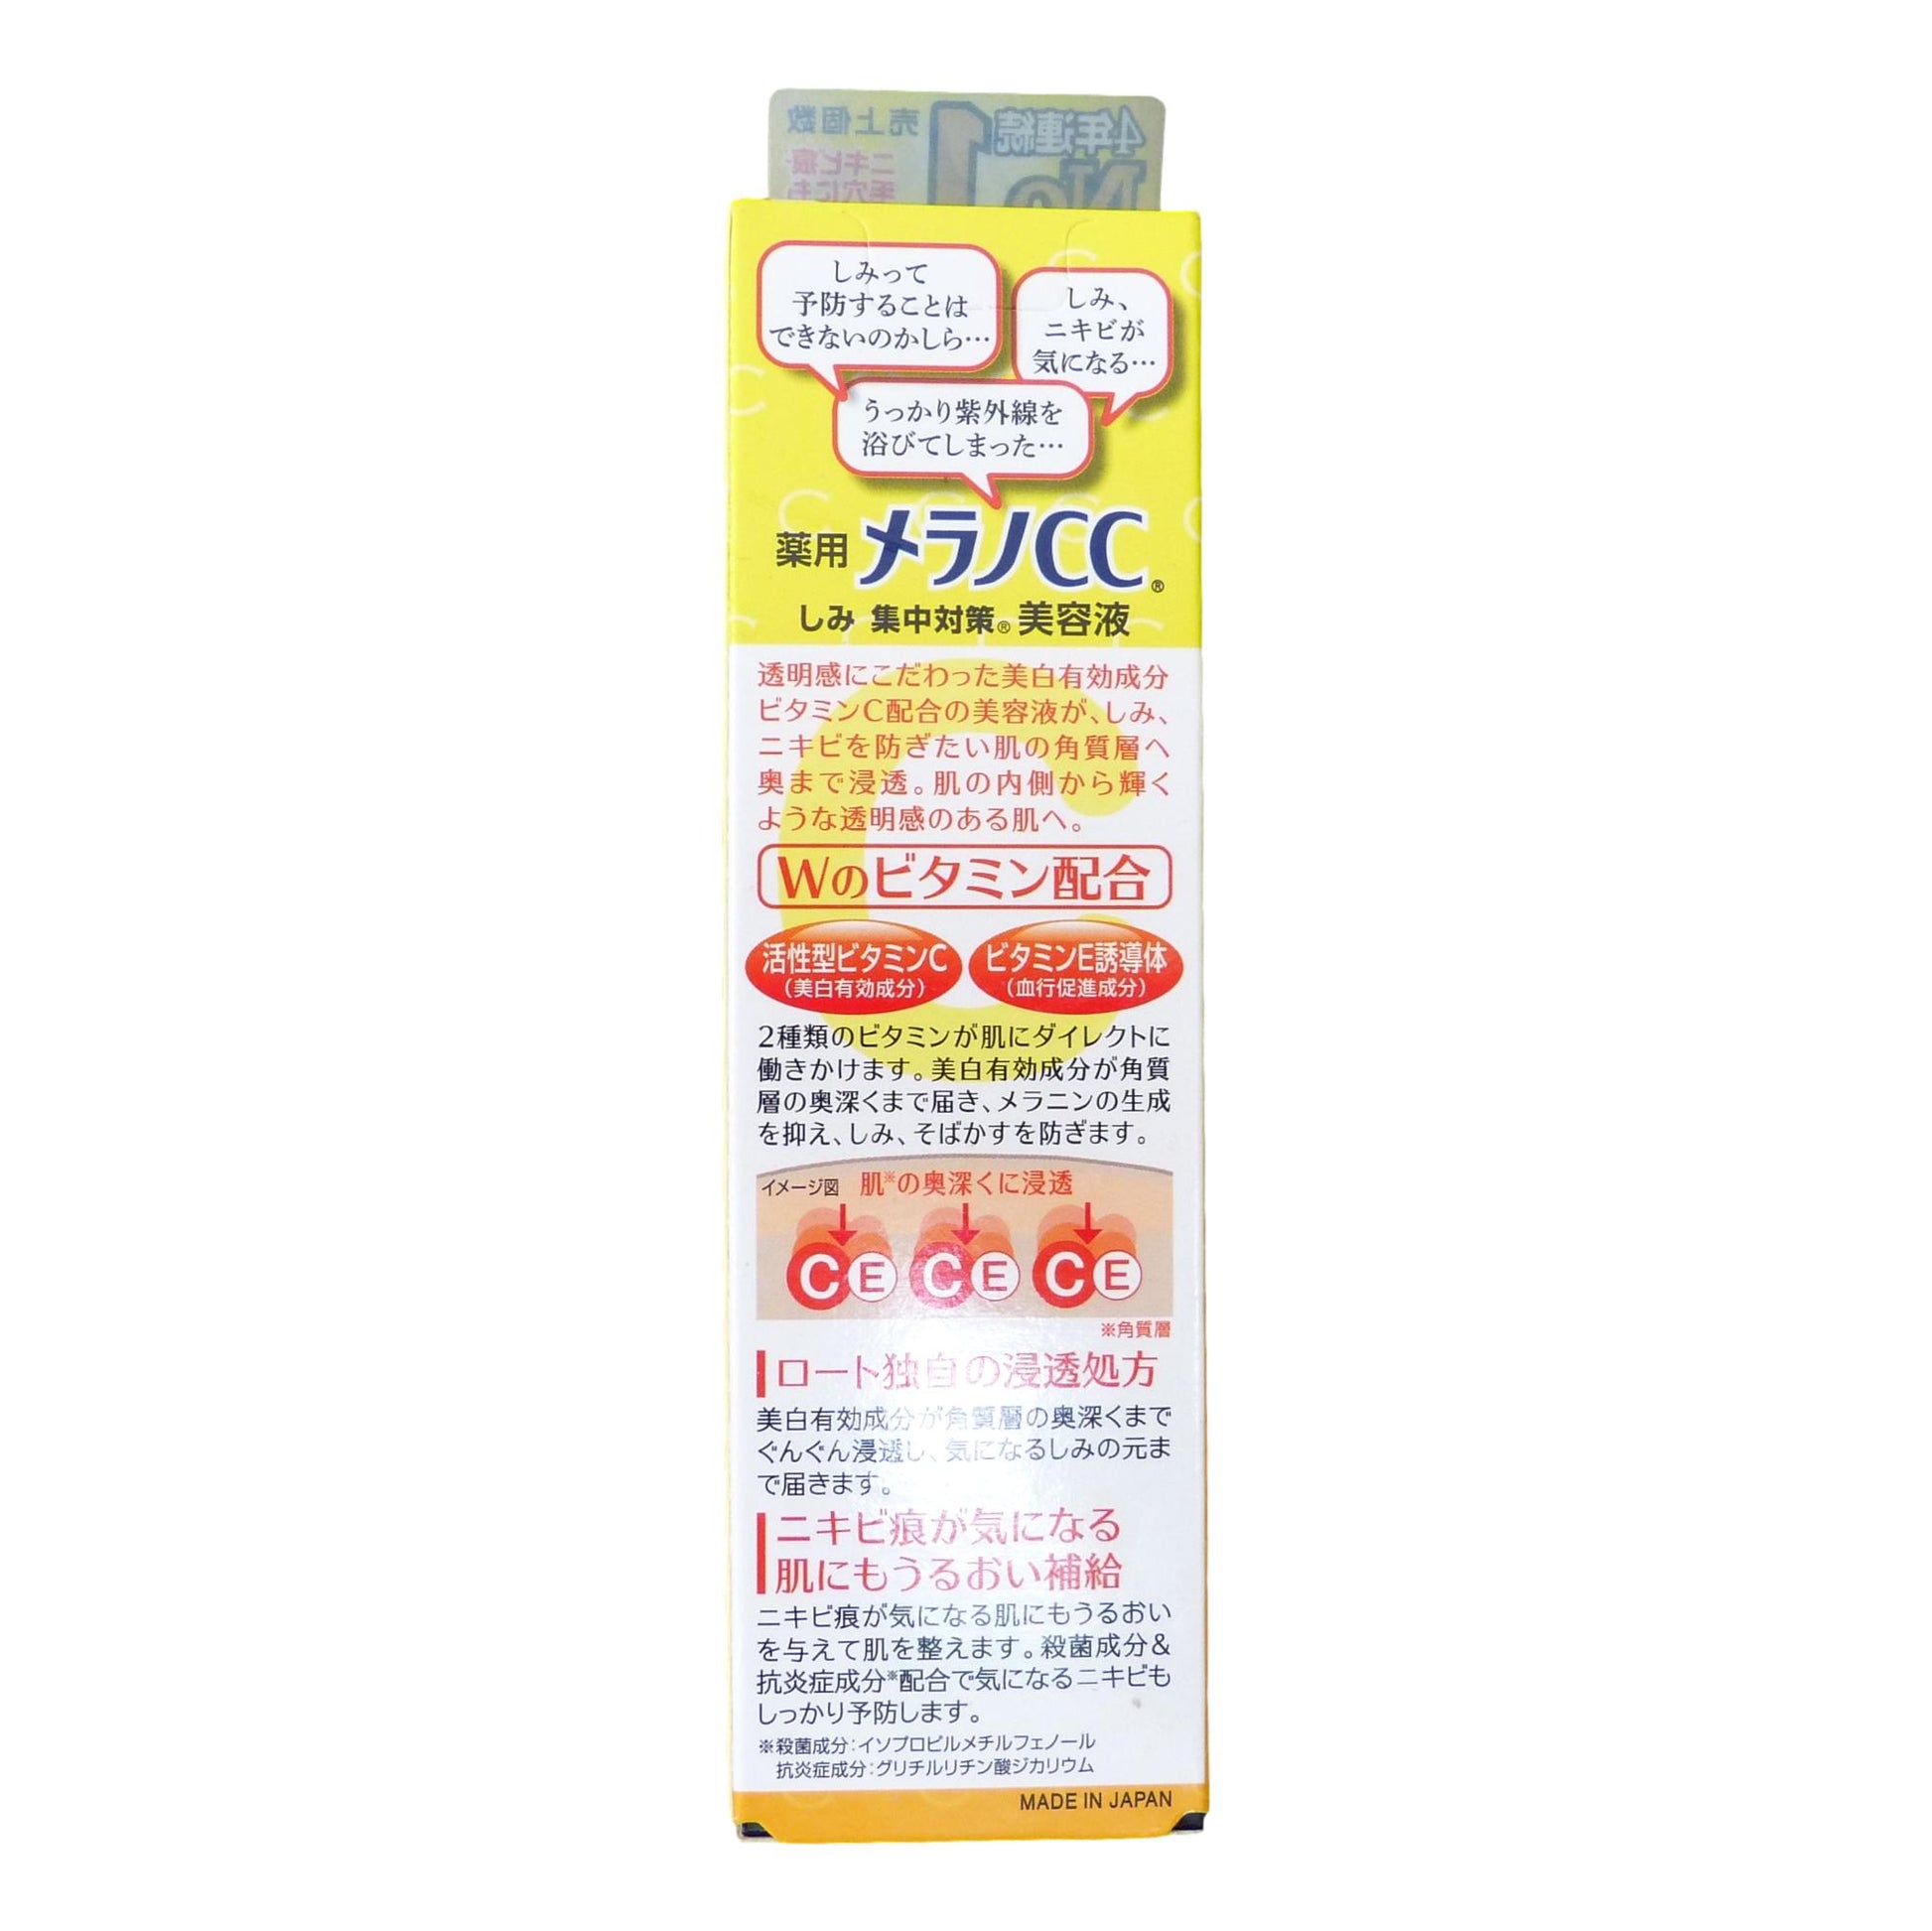 Rohto Melano CC Intensive Anti-spot Essence 20ml (Japan Version) - Asian Beauty Supply